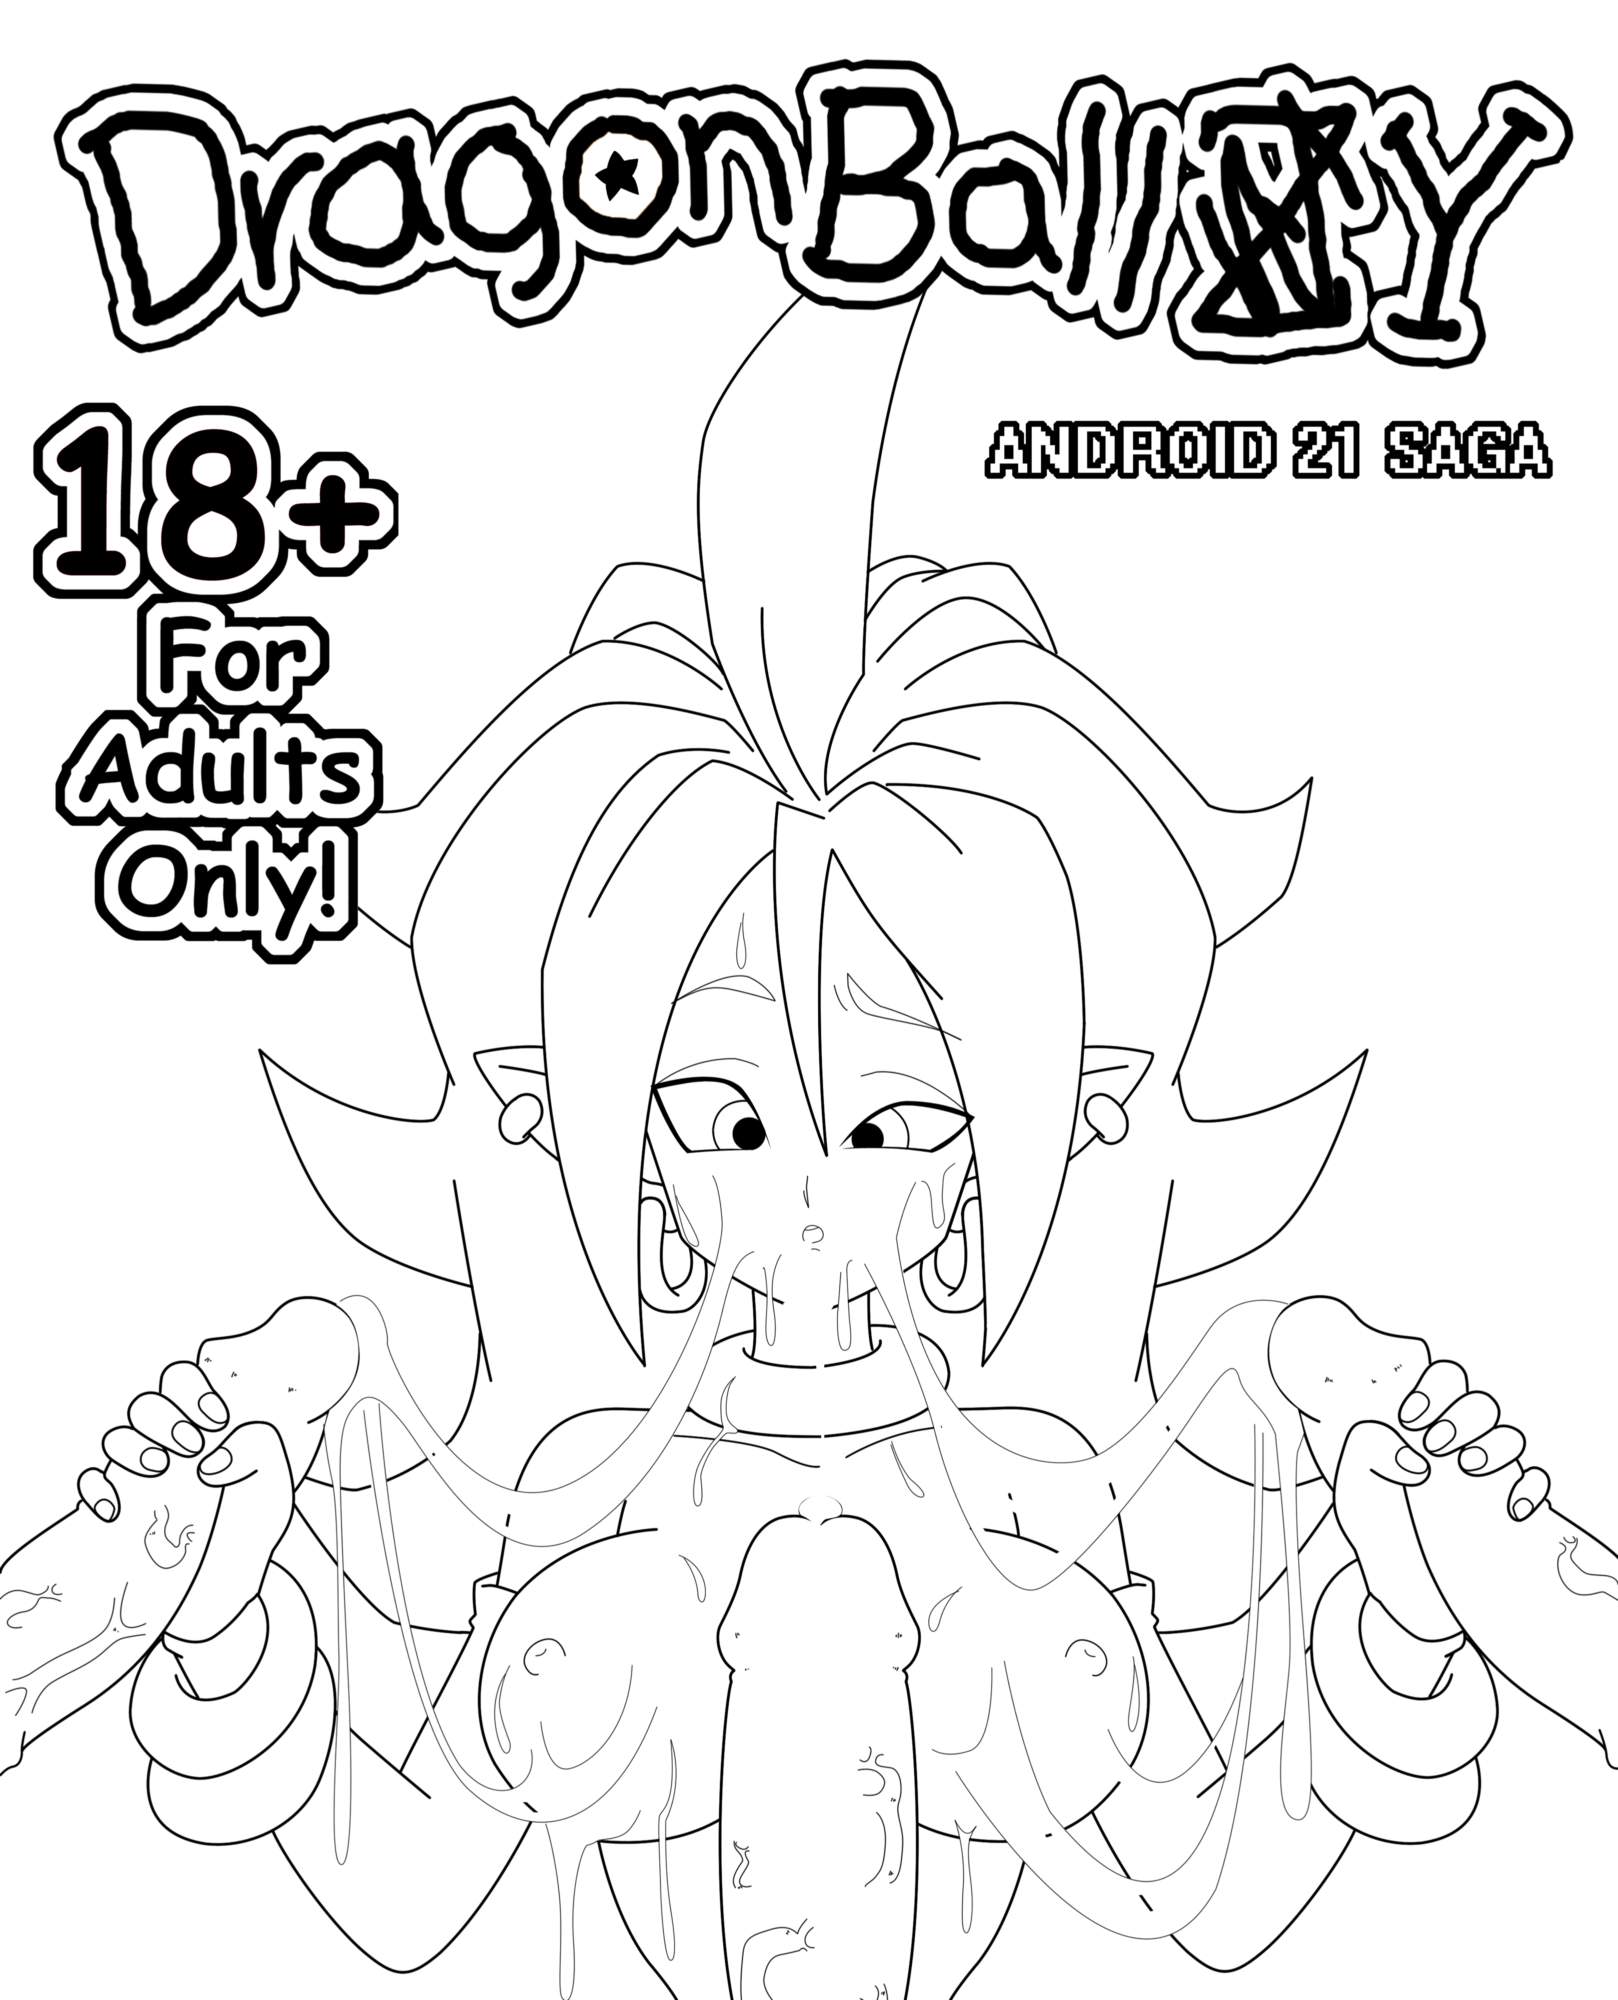 SureFap xxx porno Dragon Ball - [Botbot] - Dragon Ball Yamete: Android 21 Saga